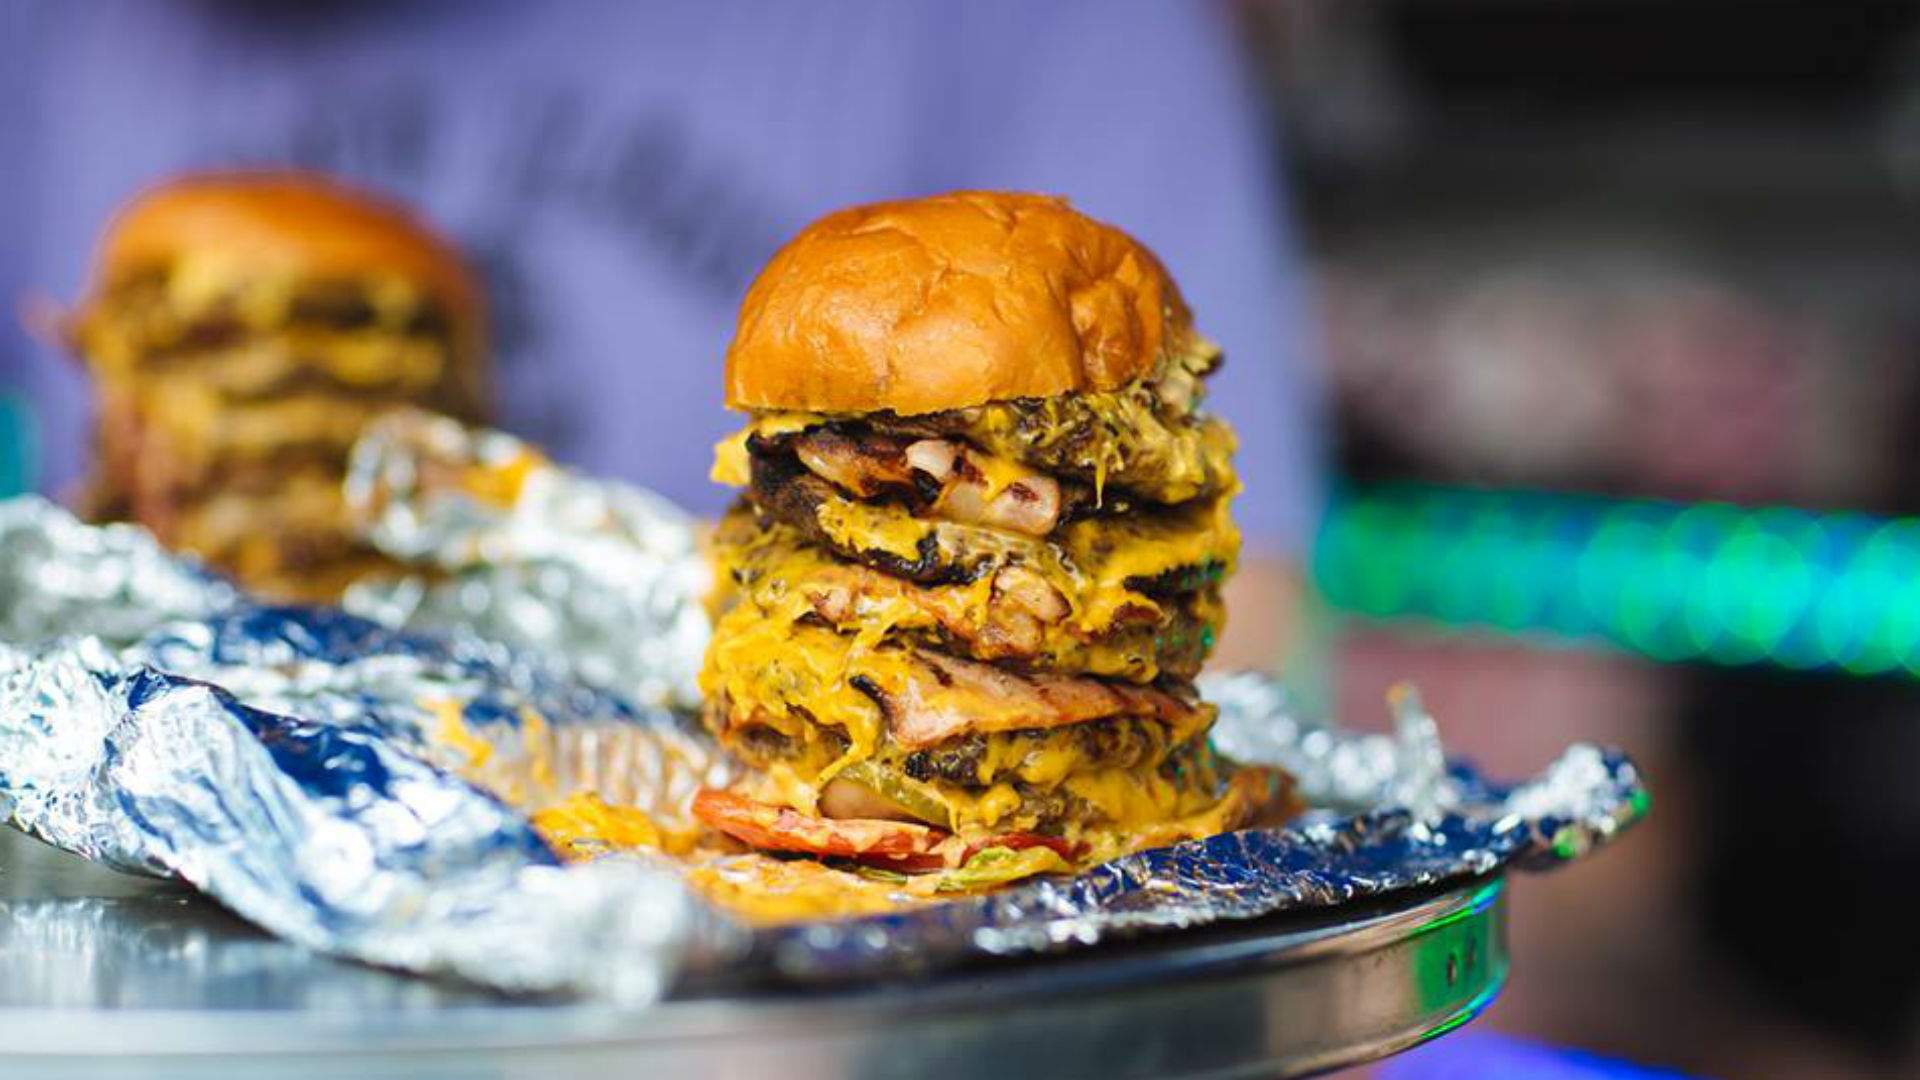 Sydney's Dedicated Burger Festival Burgerpalooza Is Back for 2017